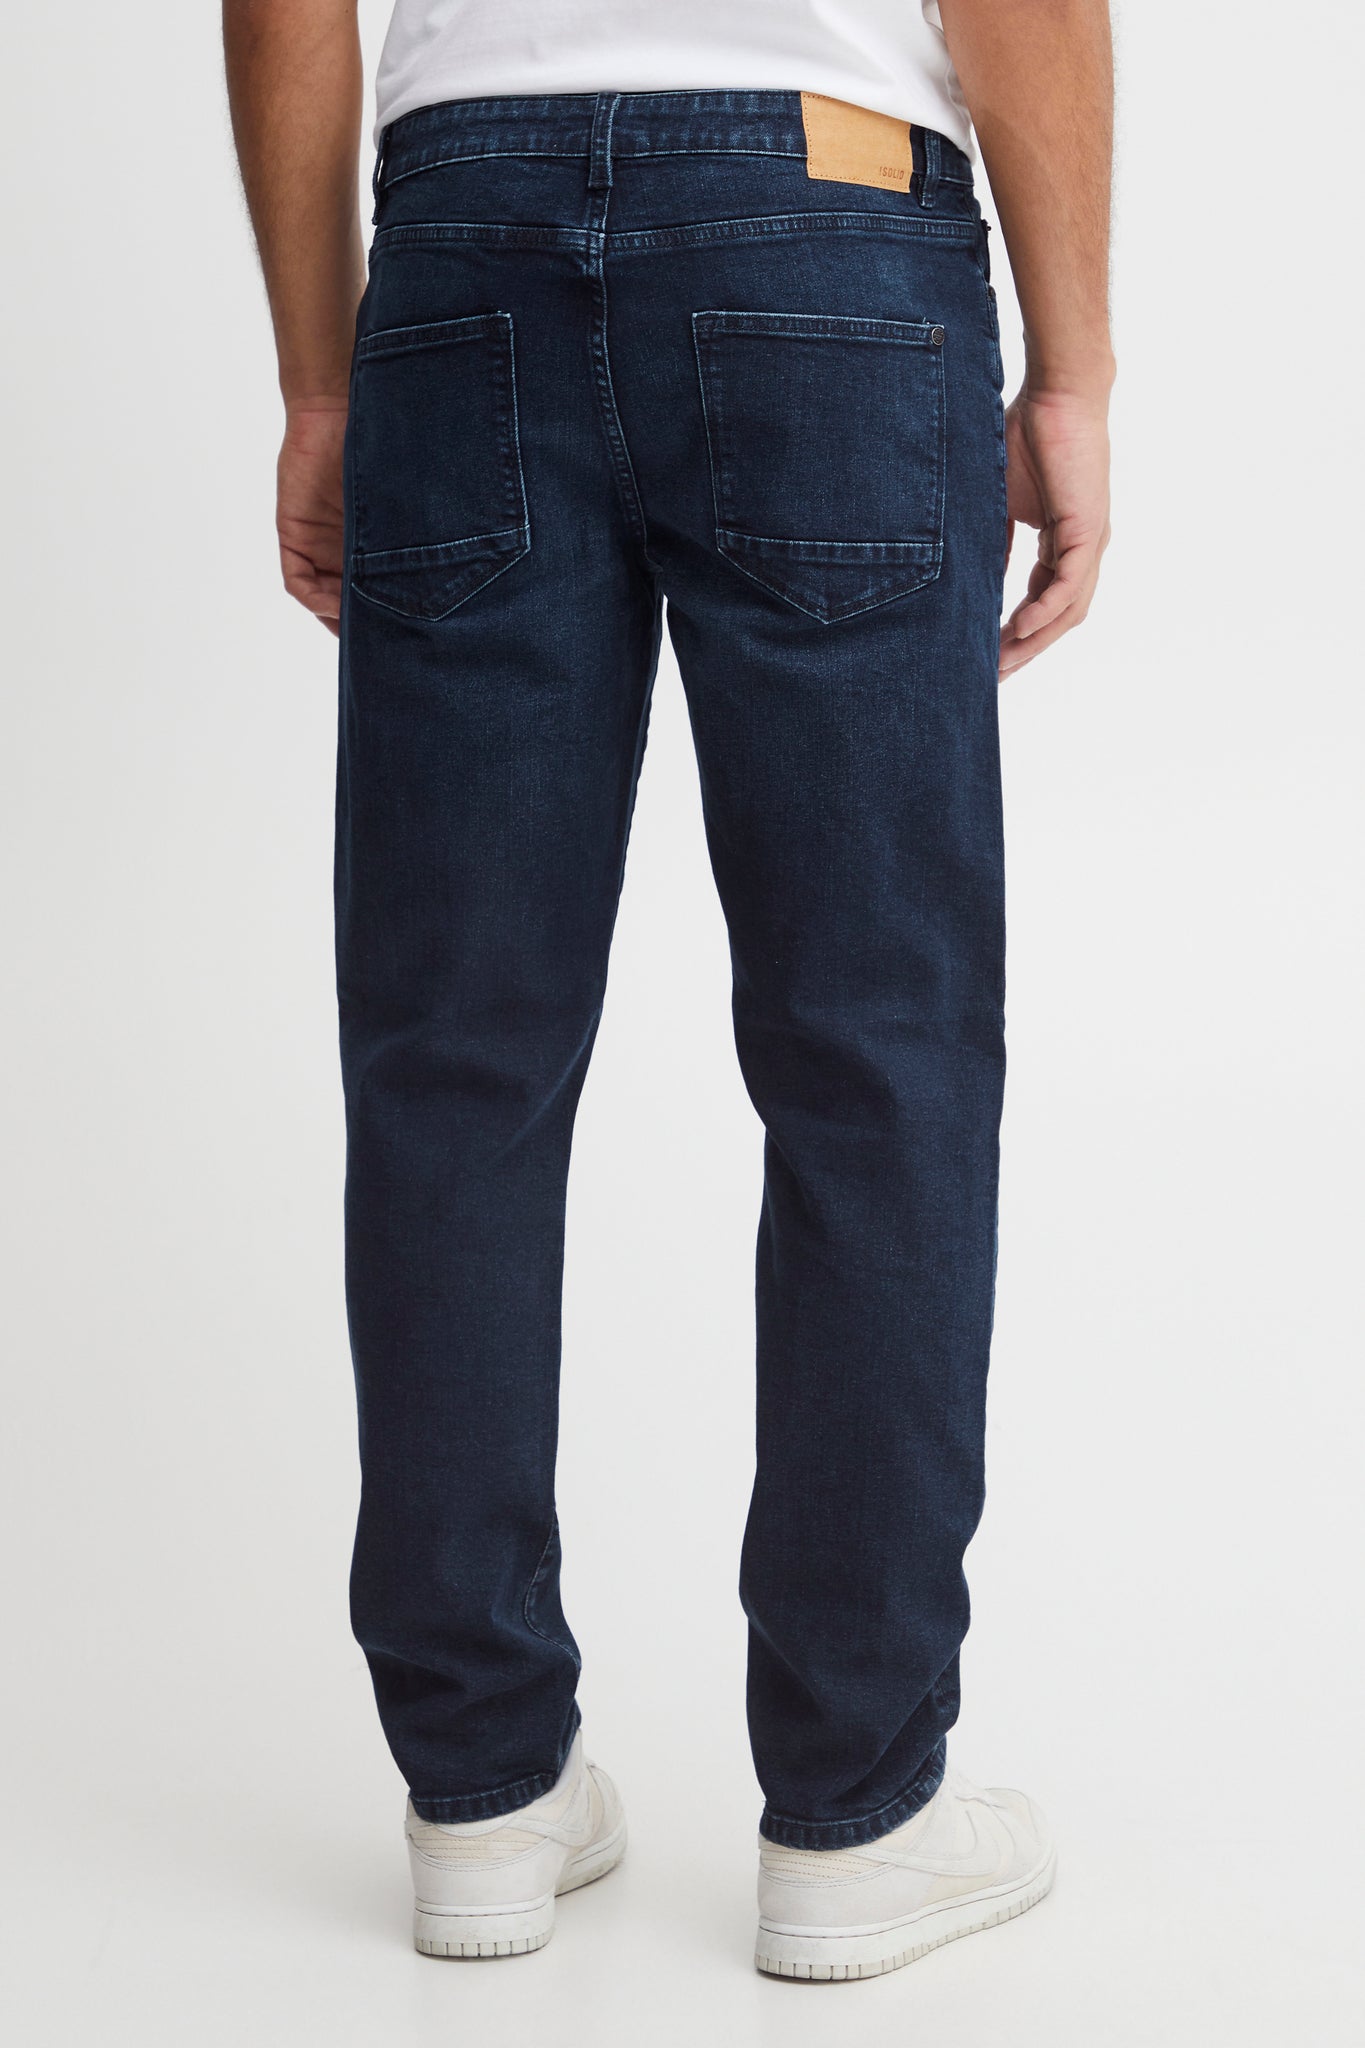 SDRYDERBLUE 202 Jeans